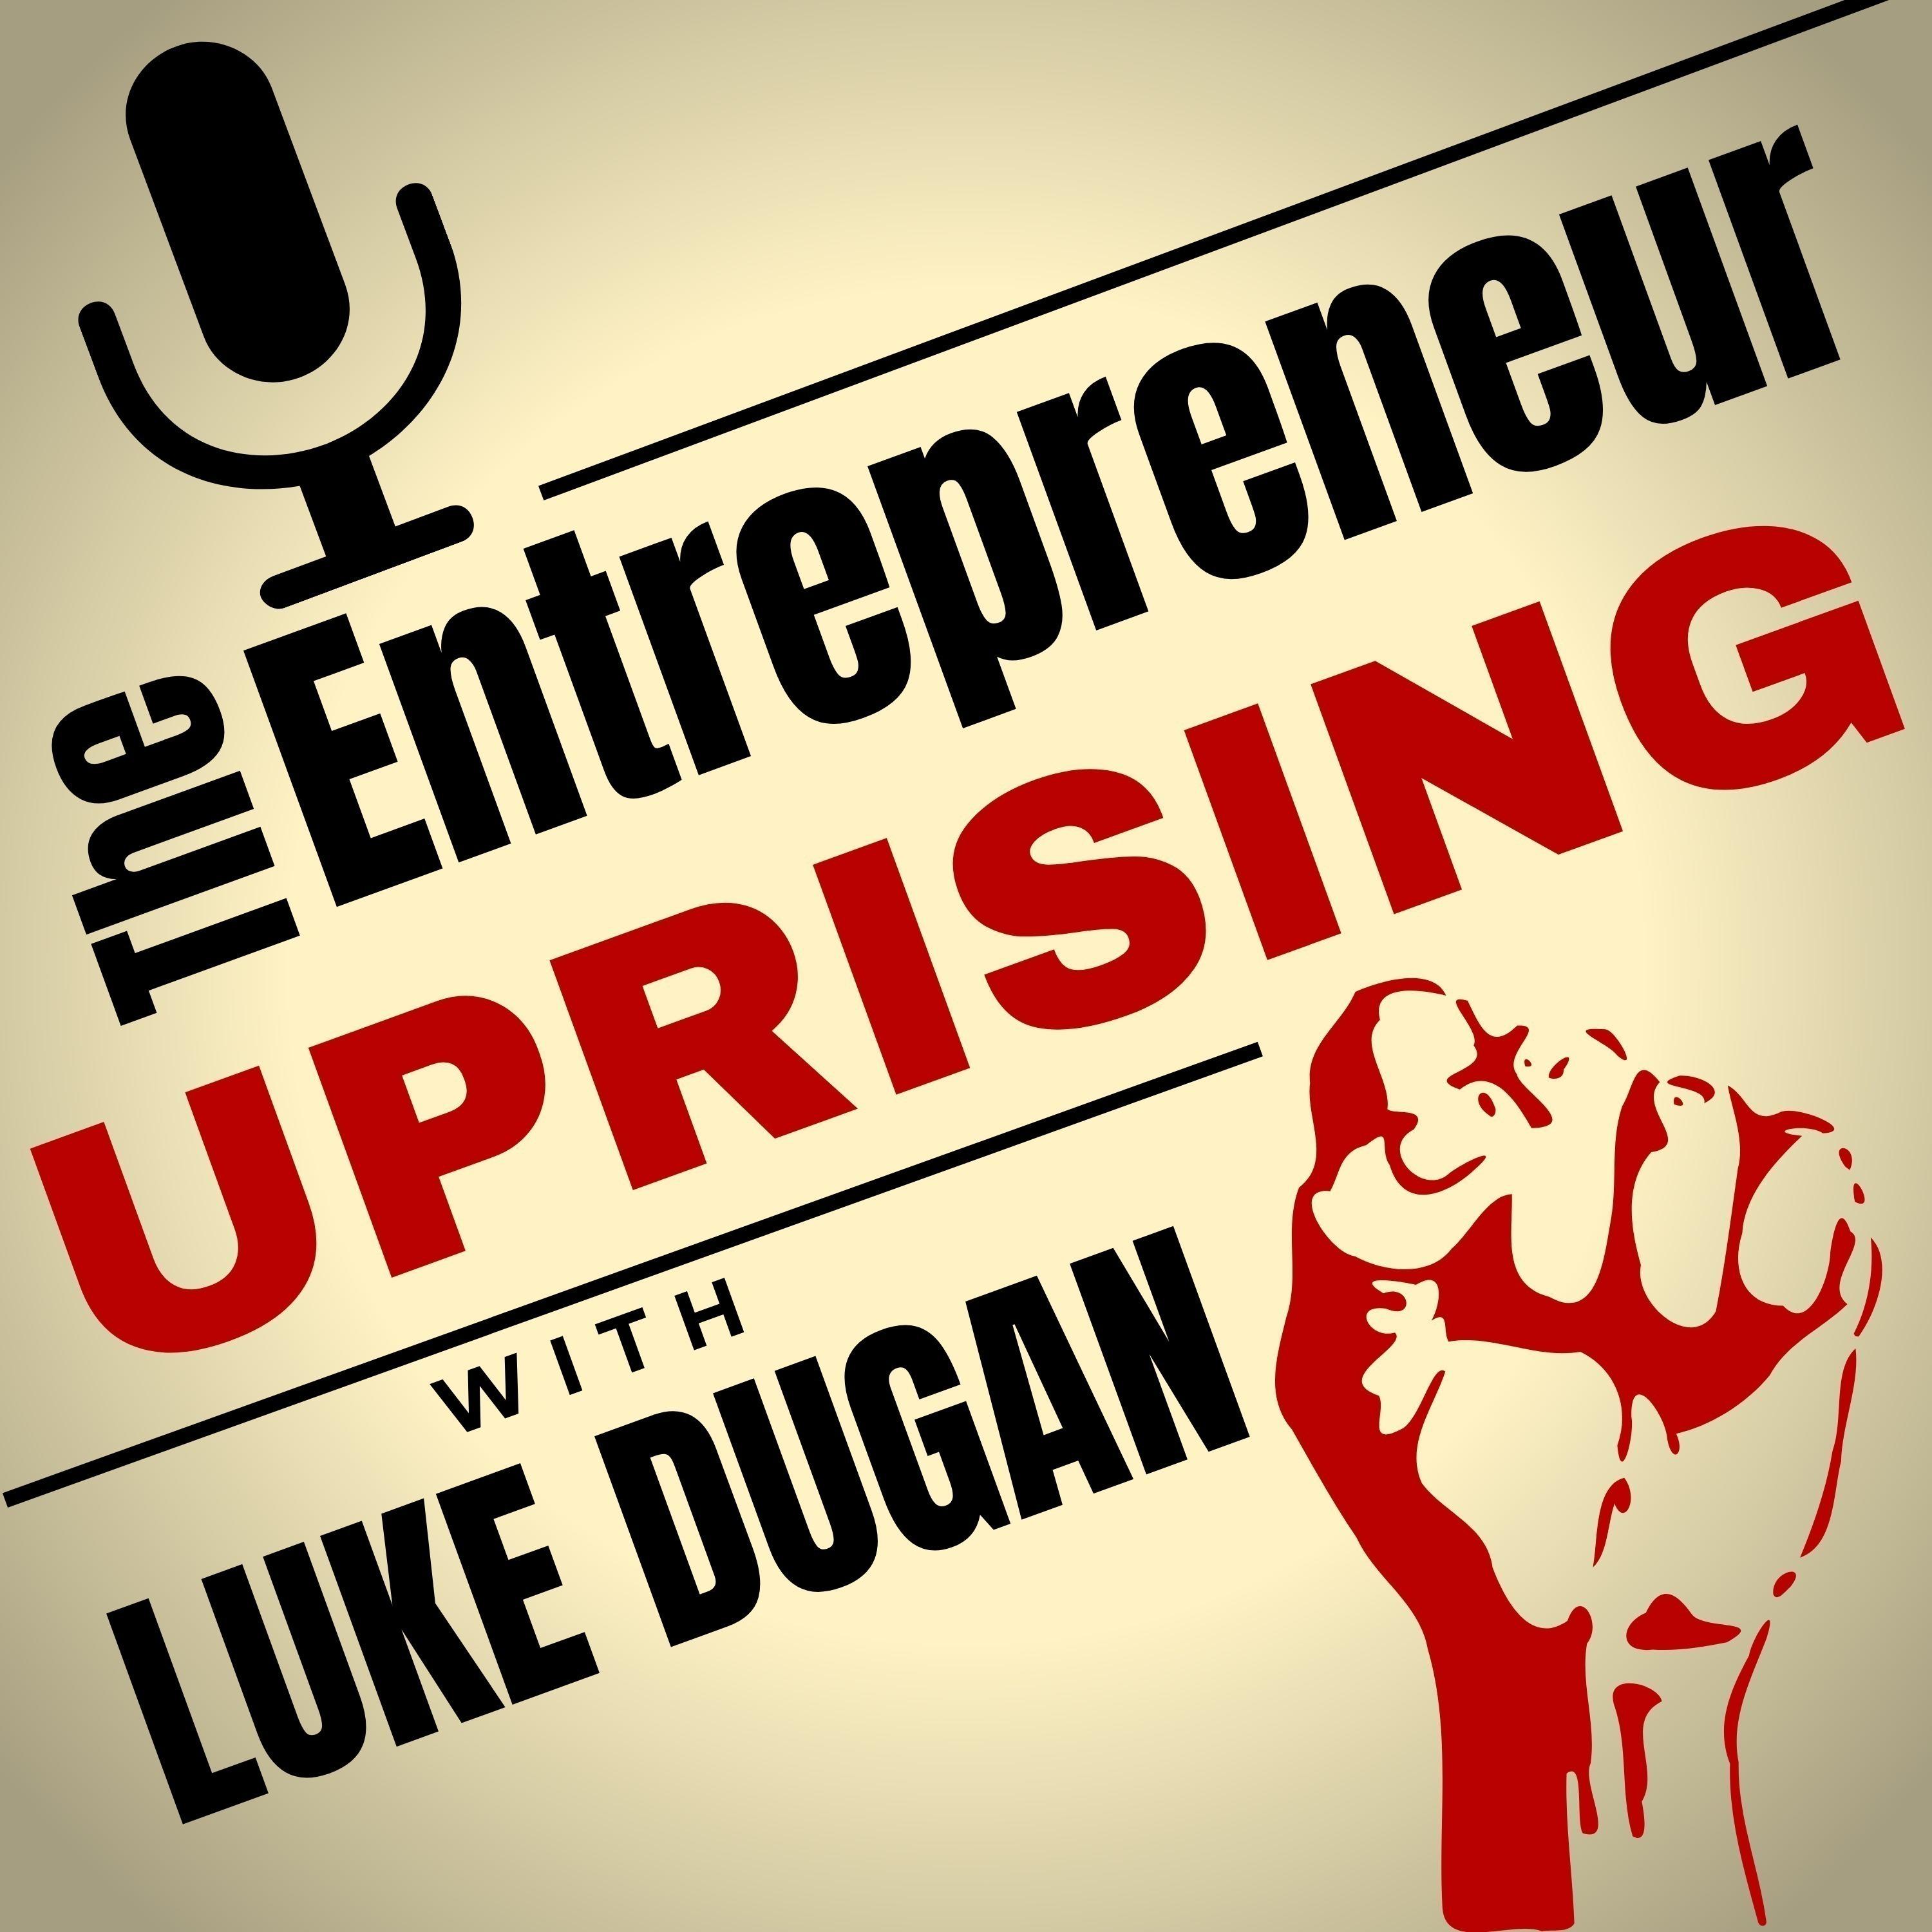 The Entrepreneur Uprising with Luke Dugan